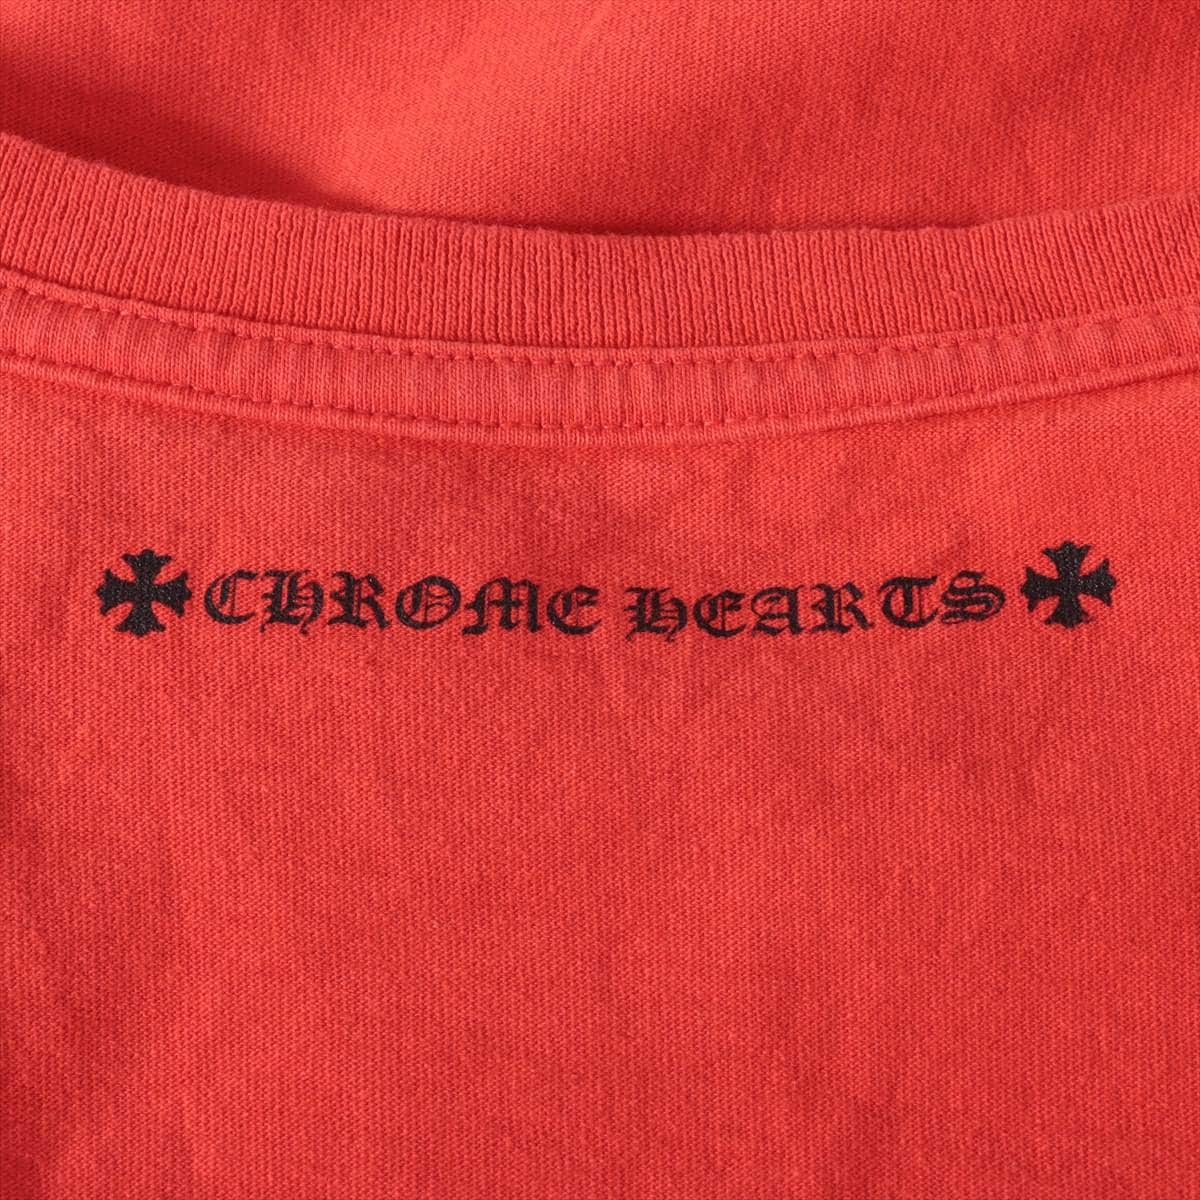 Chrome Hearts Matty Boy T-shirt Cotton L Red